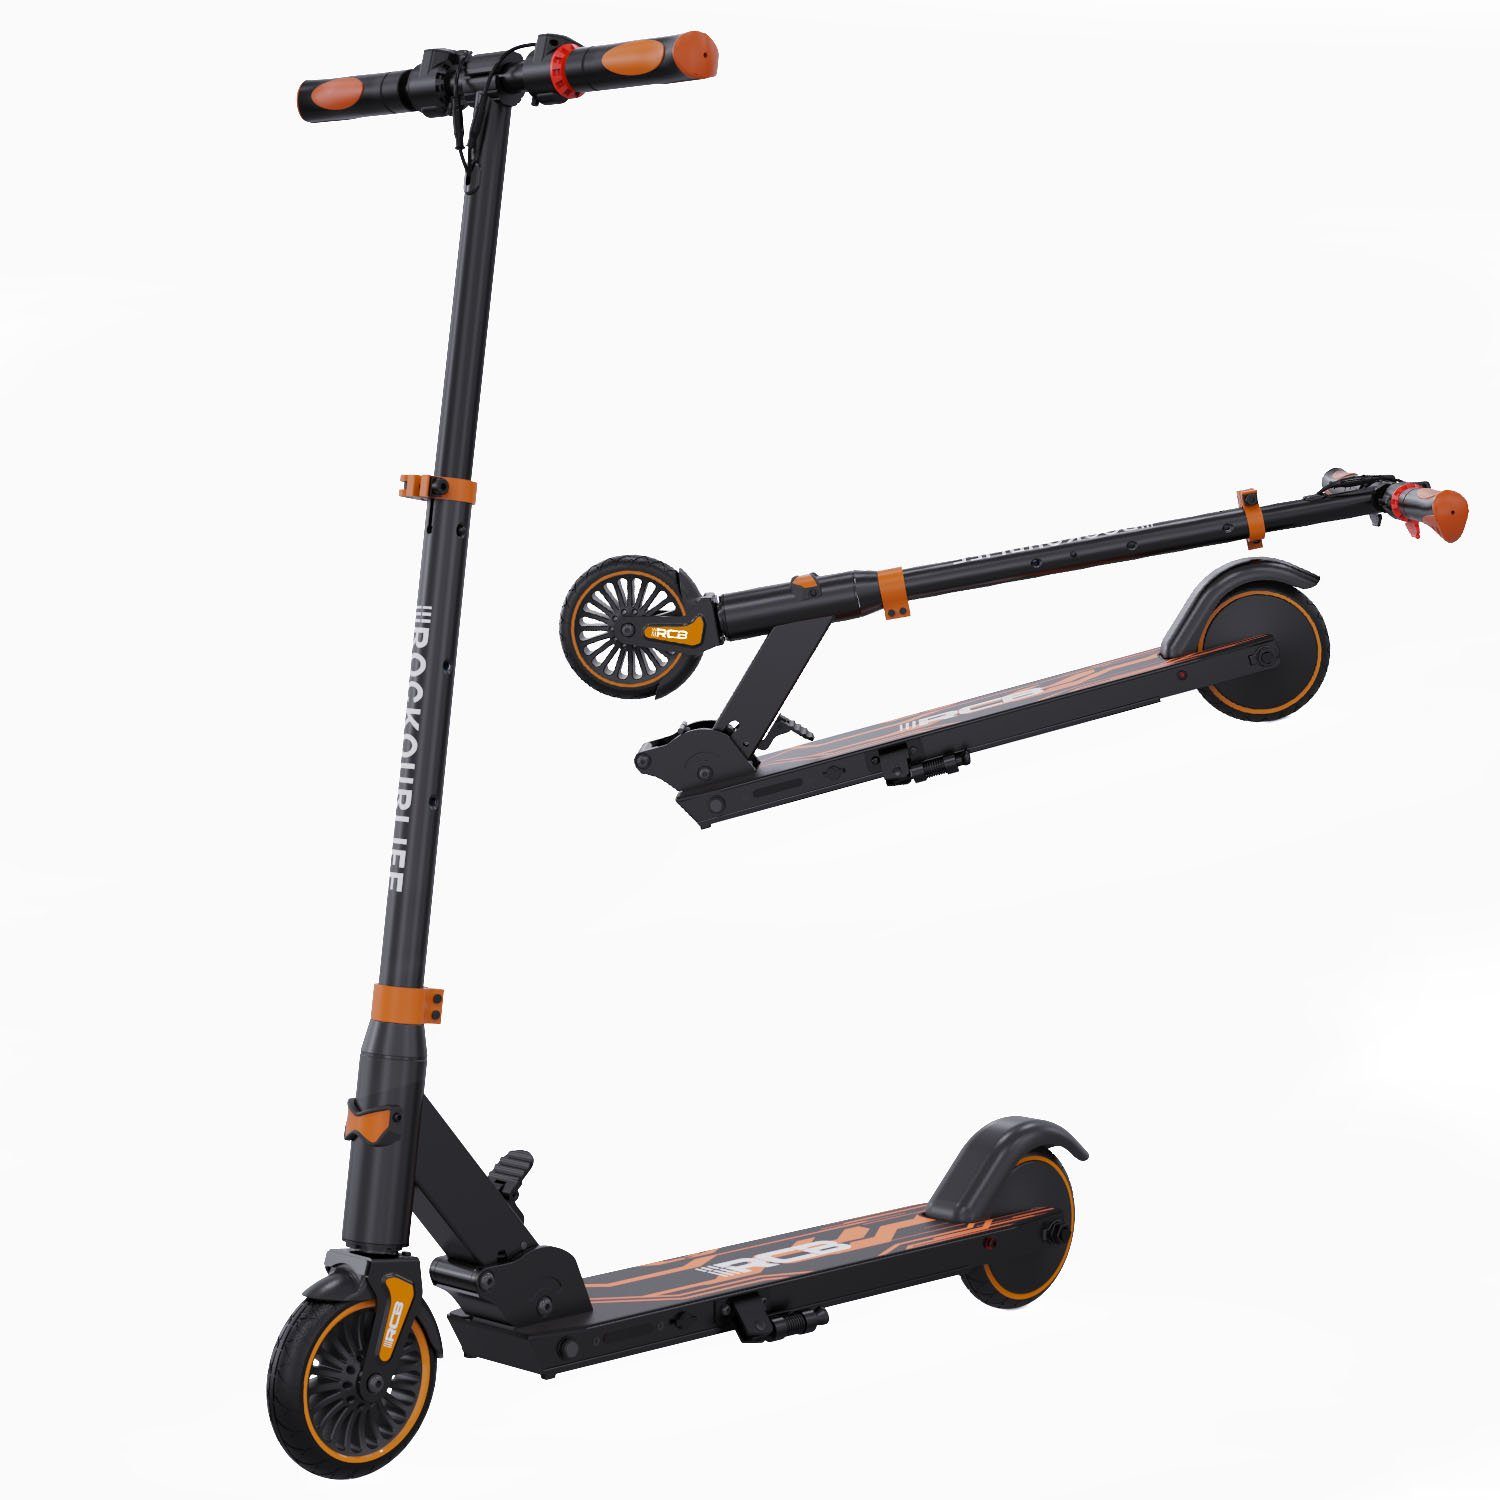 https://i.otto.de/i/otto/3bcfd841-7e42-42f5-9591-87086dbd0a04/rcb-elektro-kinderroller-kinder-roller-elektro-kickscooter-fur-kinder-150w-orange.jpg?$formatz$